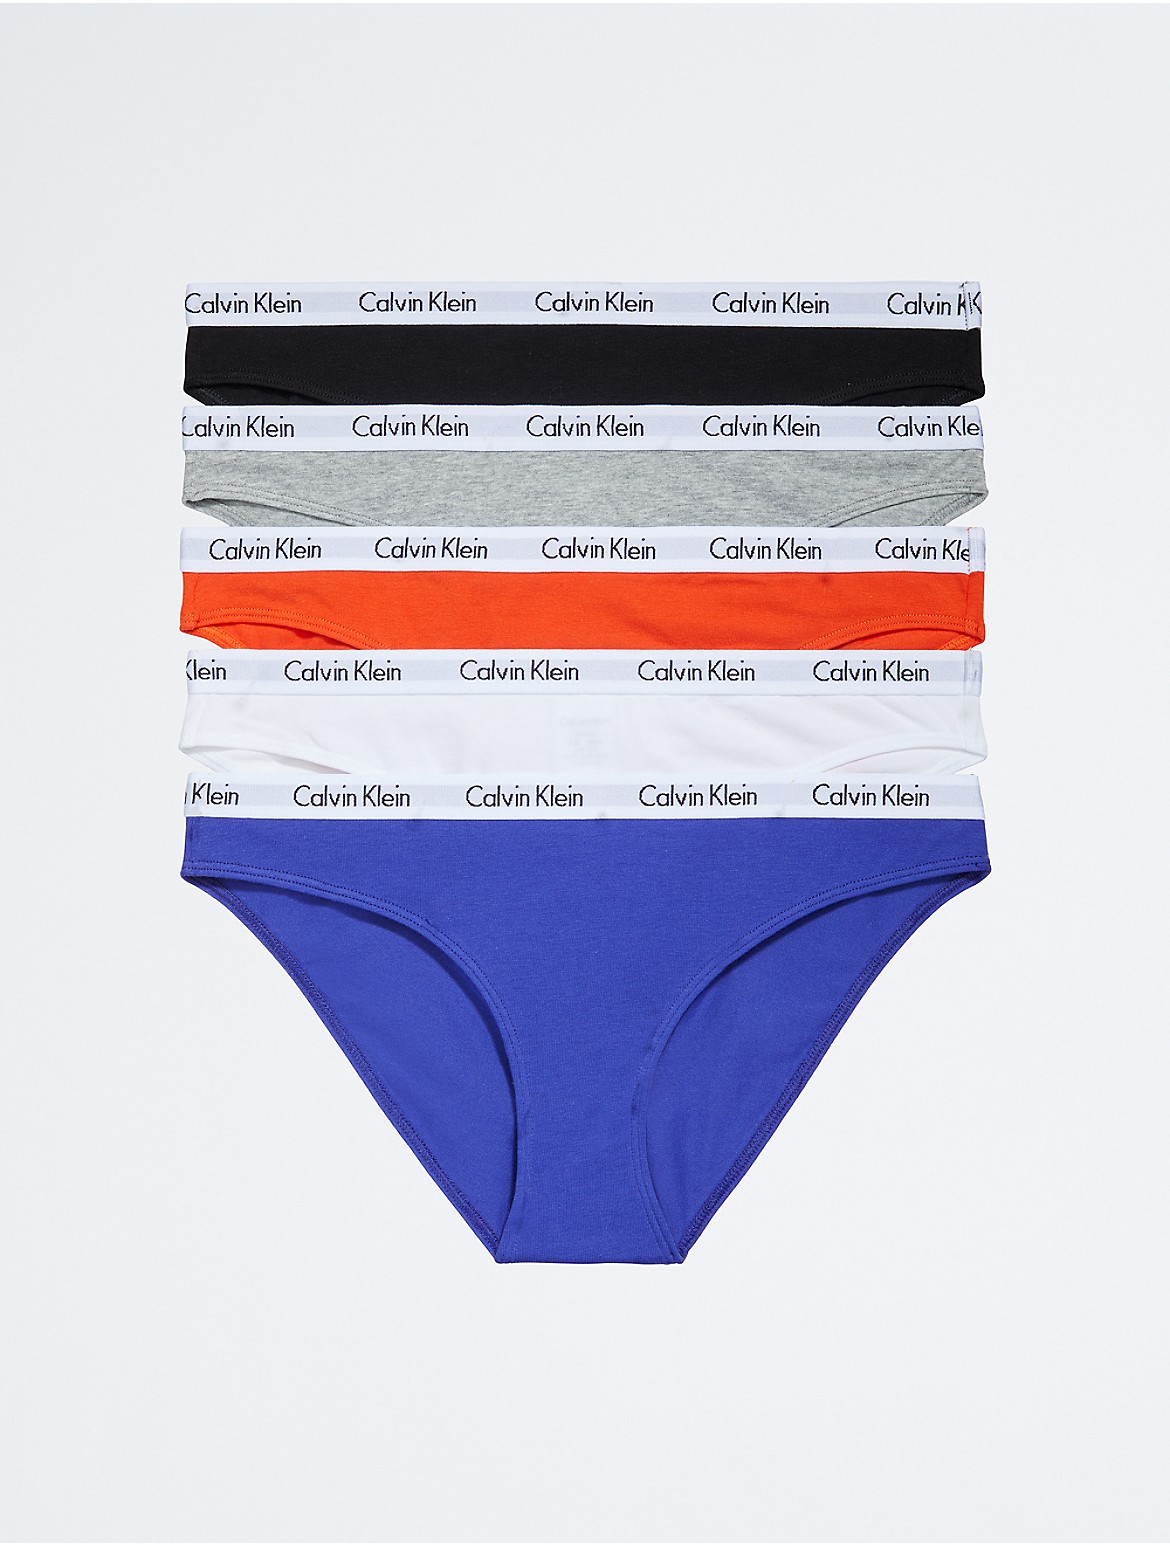 Calvin Klein Women's Carousel Logo 5-Pack Bikini - Multi - XS